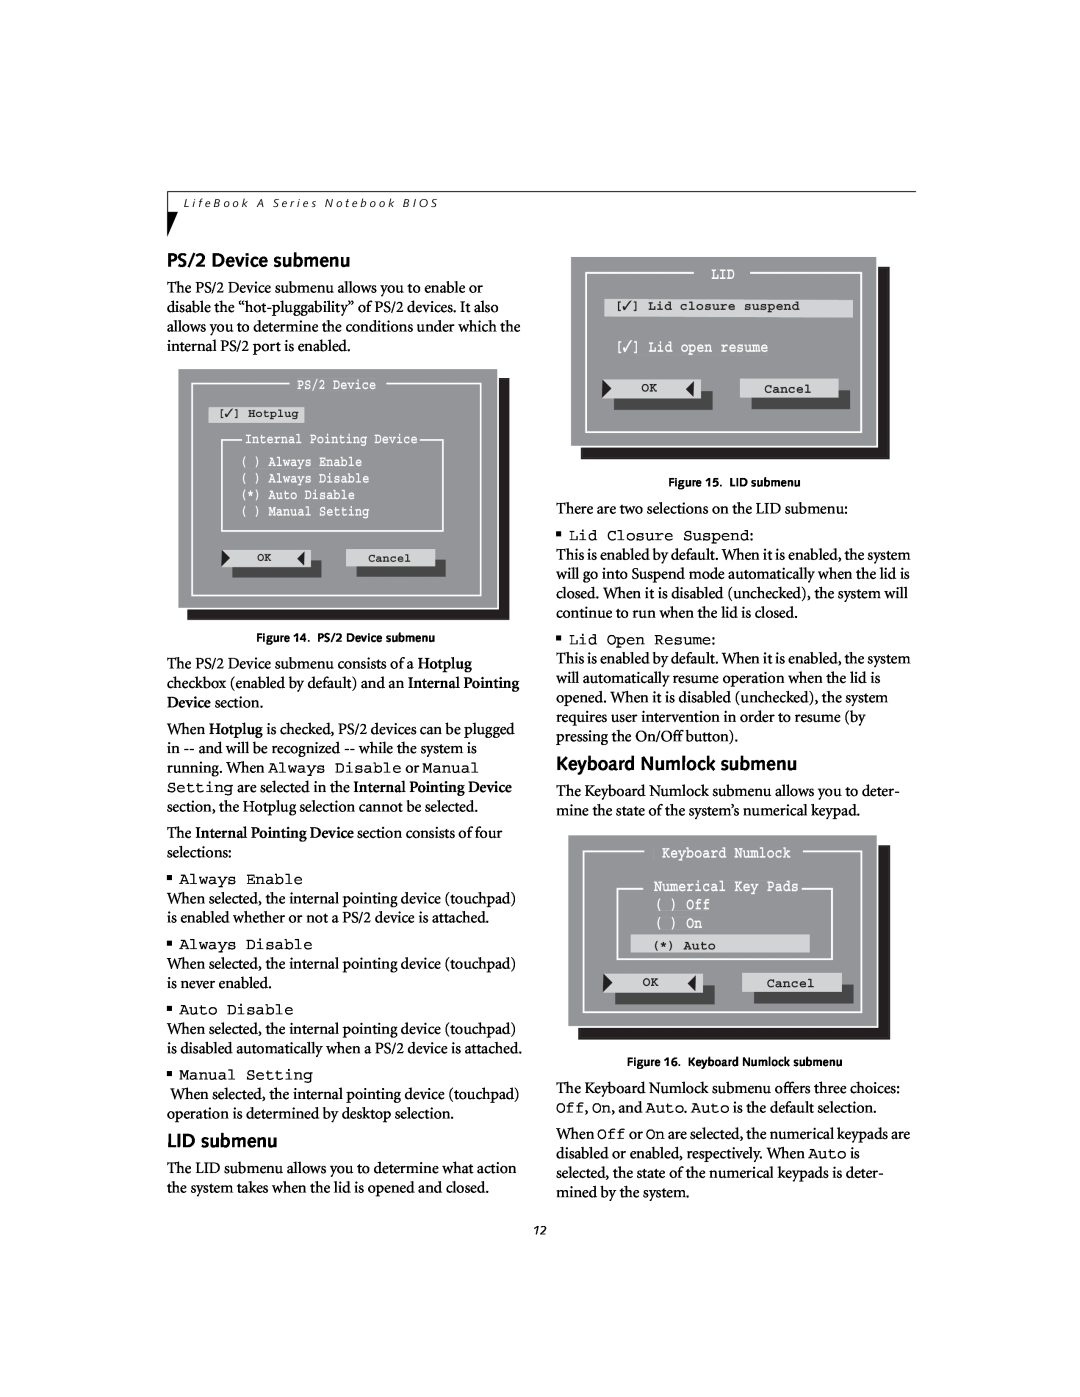 Fujitsu A1010 manual PS/2 Device submenu, LID submenu, Keyboard Numlock submenu, Lid open resume 